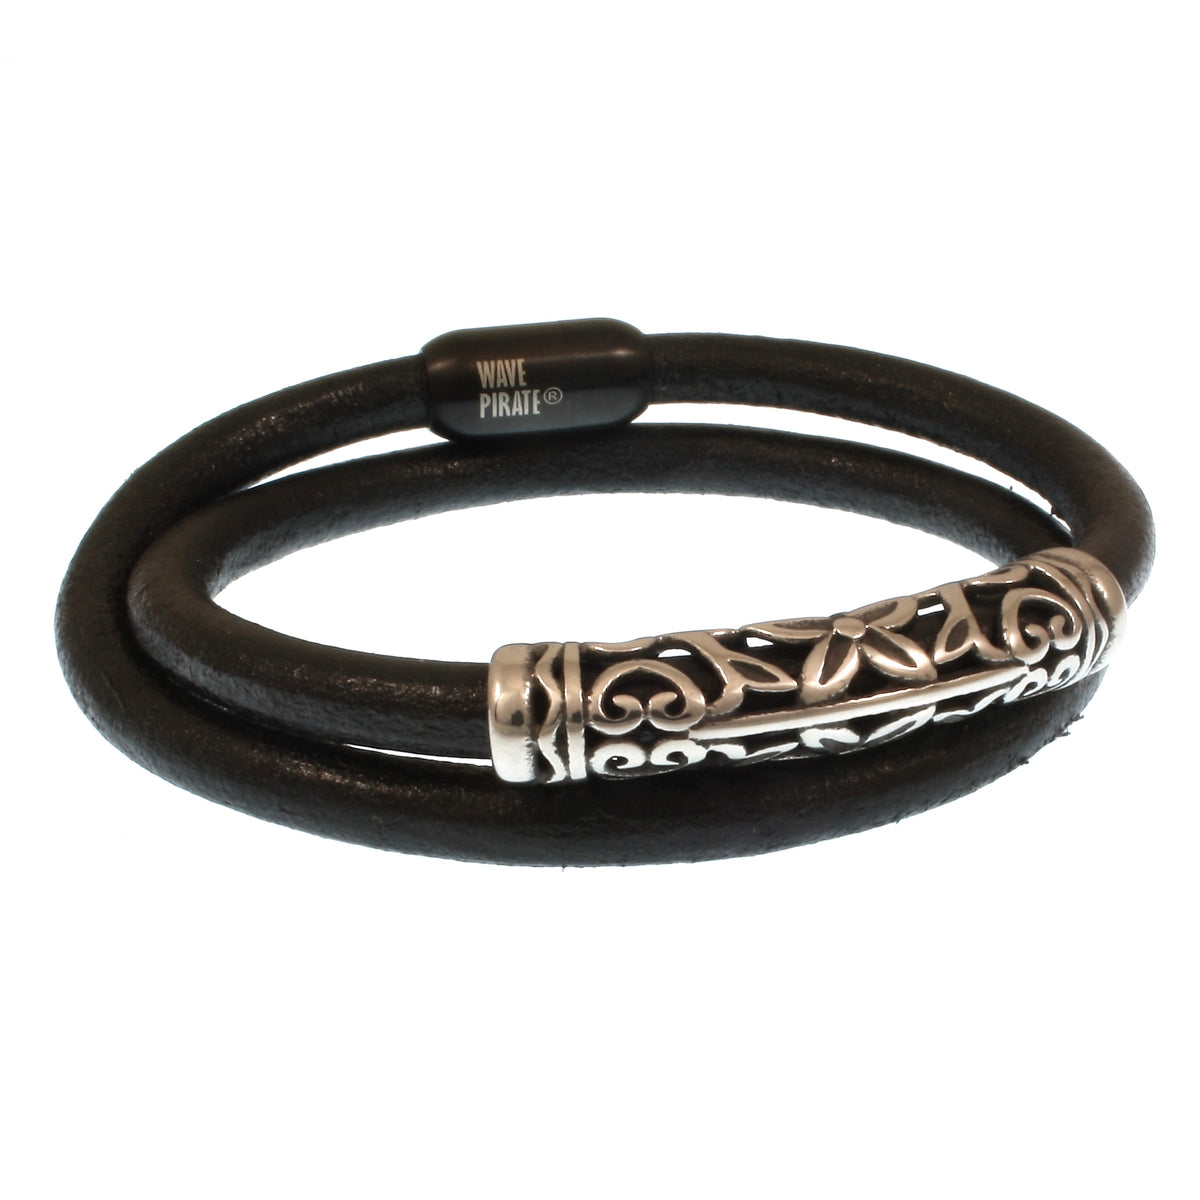 Herren-Leder-Armband-hawaii-xo-schwarz-Edelstahlverschluss-hinten-wavepirate-shop-r